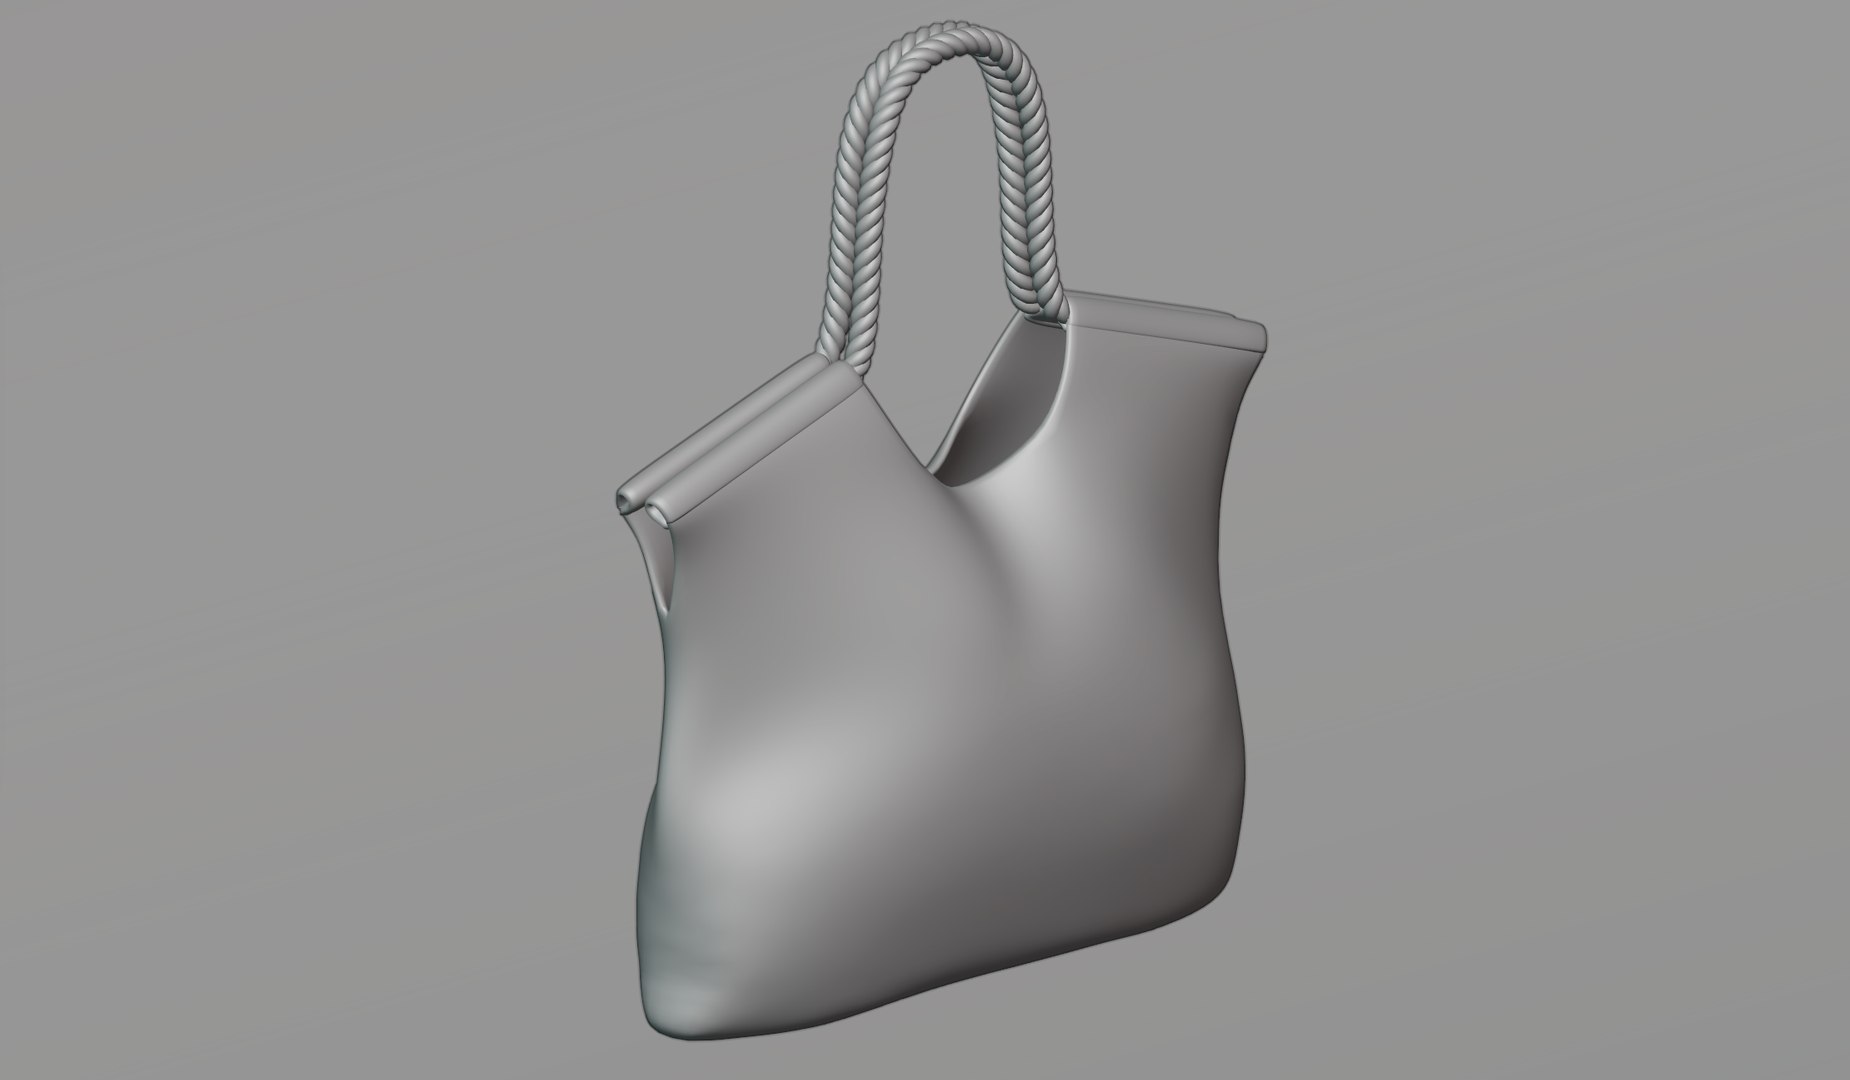 Beach Bag With Rope Handles 3D Model - TurboSquid 1807948